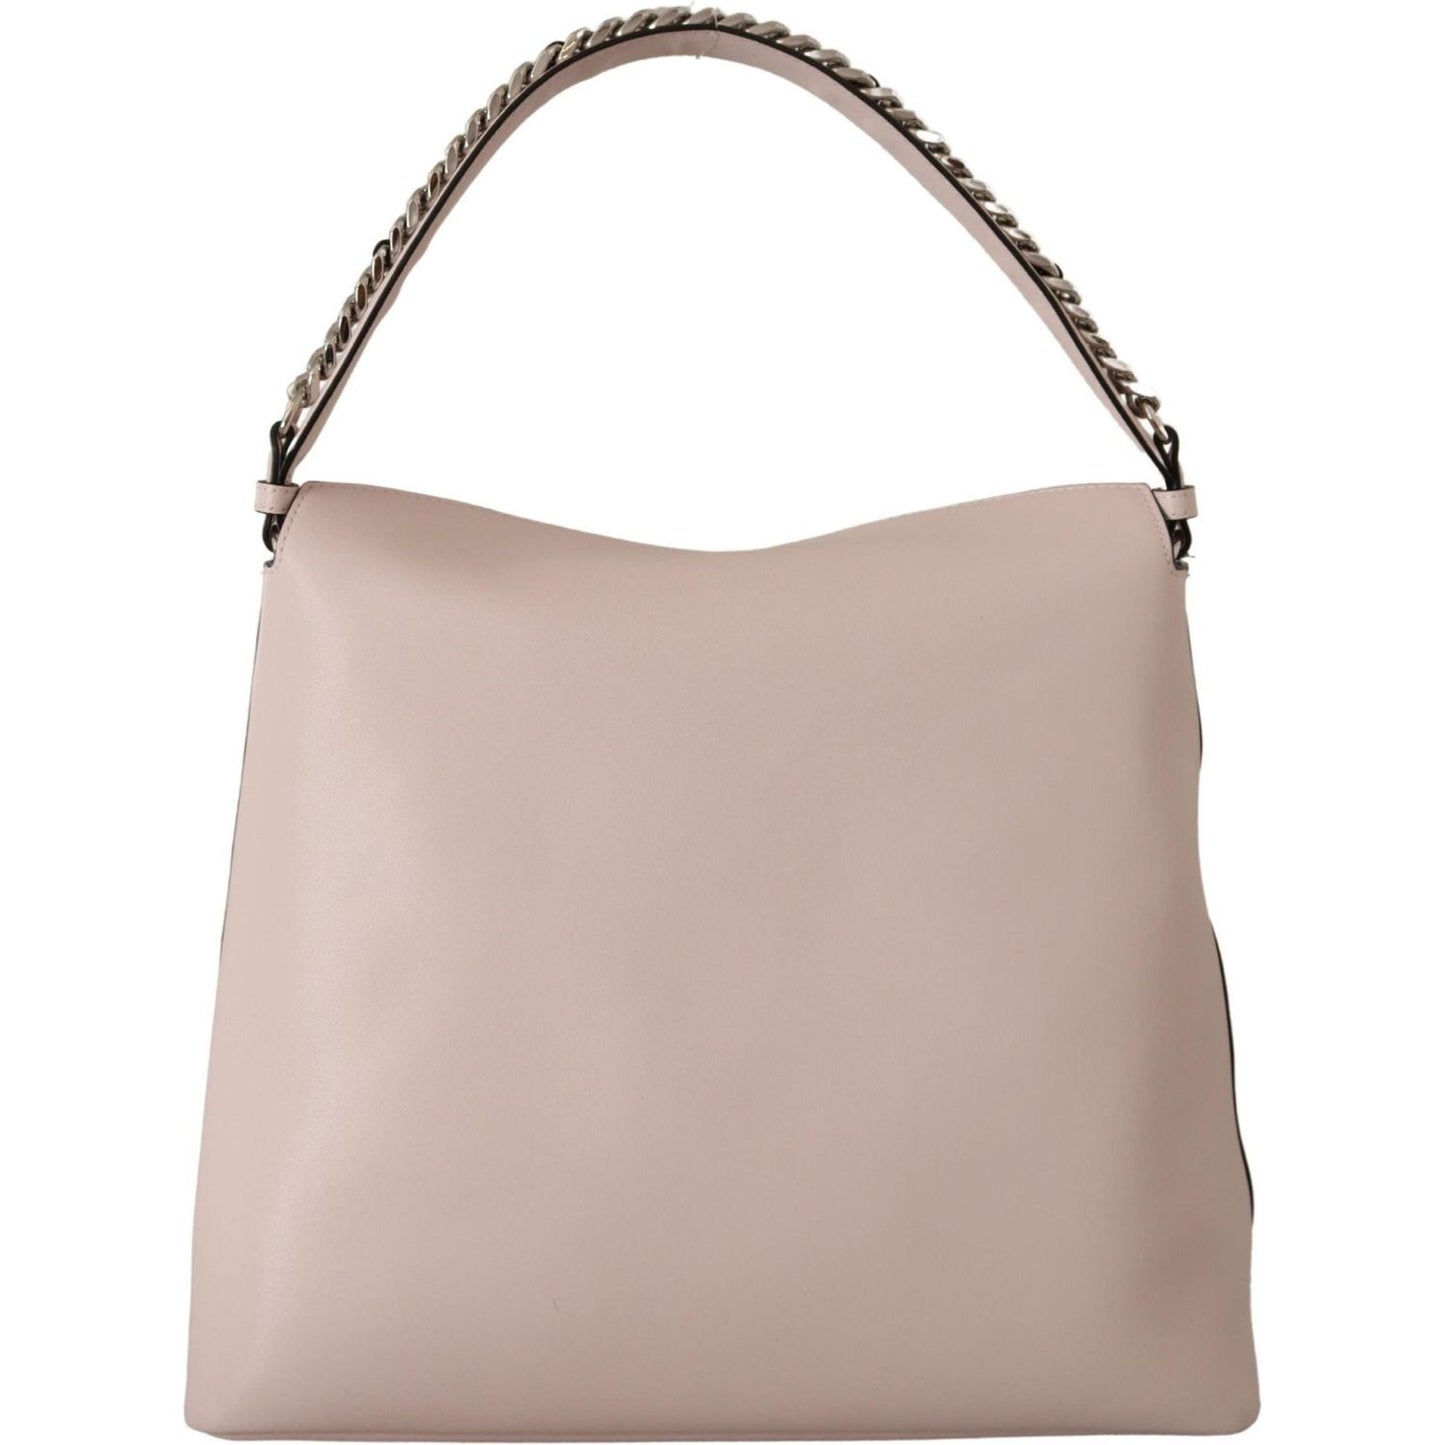 Karl Lagerfeld Elegant Mauve Chalk Leather Shoulder Bag light-pink-mauve-leather-shoulder-bag IMG_7437-scaled-cde0e028-a26.jpg